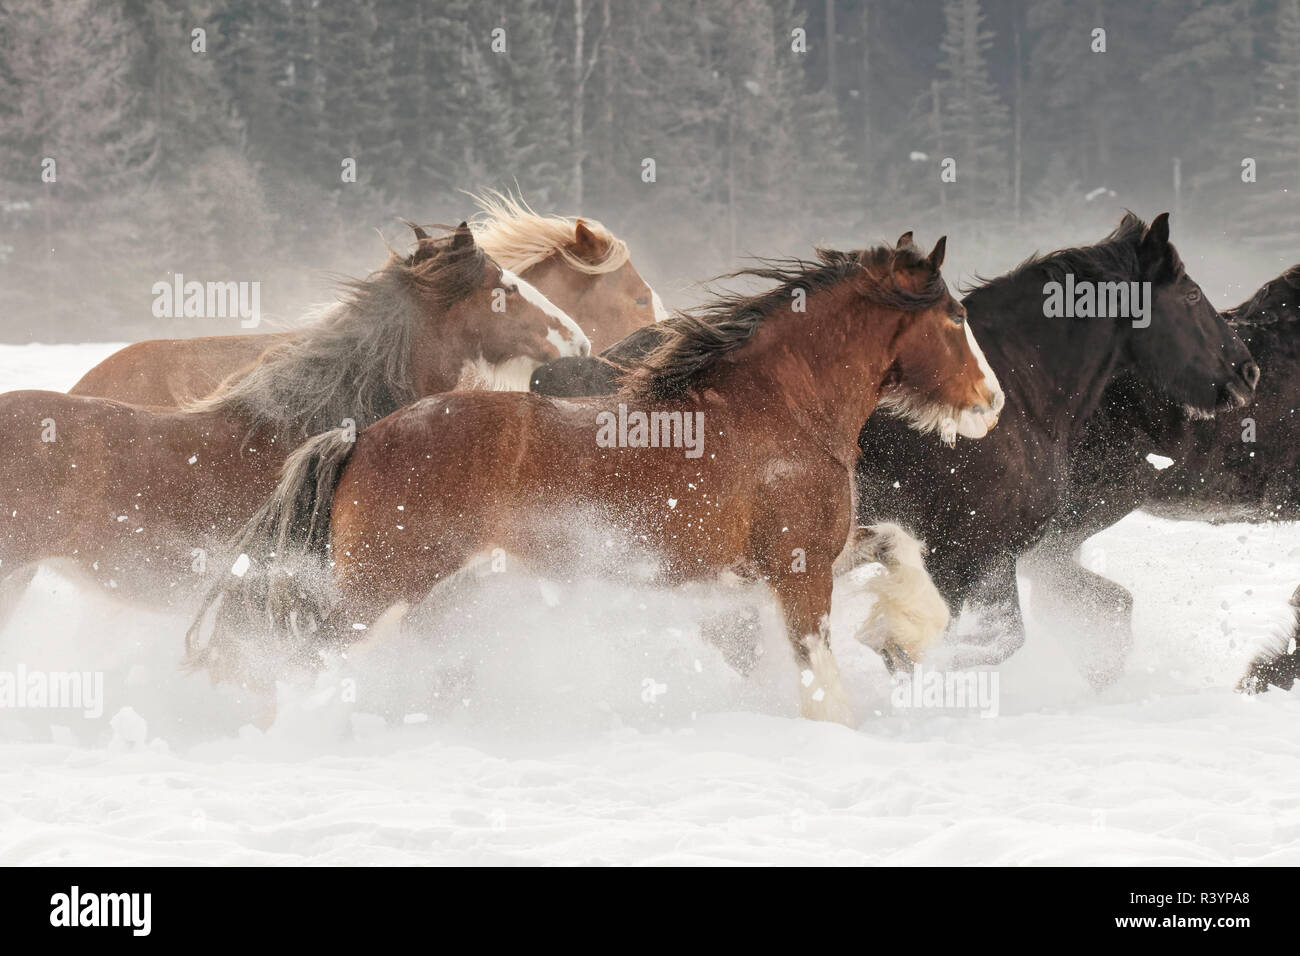 Belgian Horse roundup in winter, Kalispell, Montana. Equus ferus caballus Stock Photo